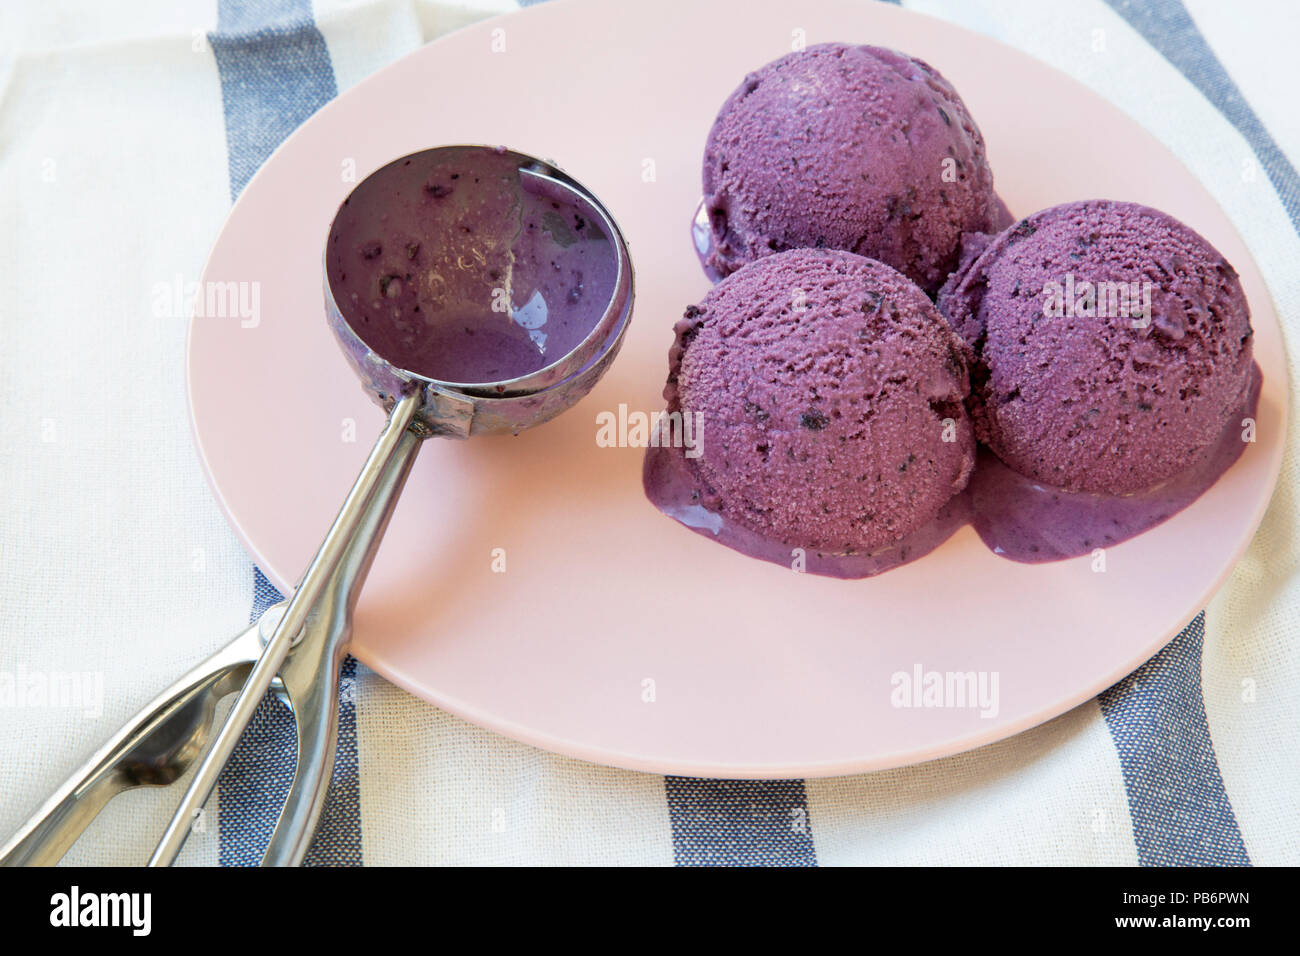 https://c8.alamy.com/comp/PB6PWN/blueberry-ice-cream-balls-with-icecream-scoop-on-a-pink-plate-over-striped-napkin-side-view-closeup-PB6PWN.jpg